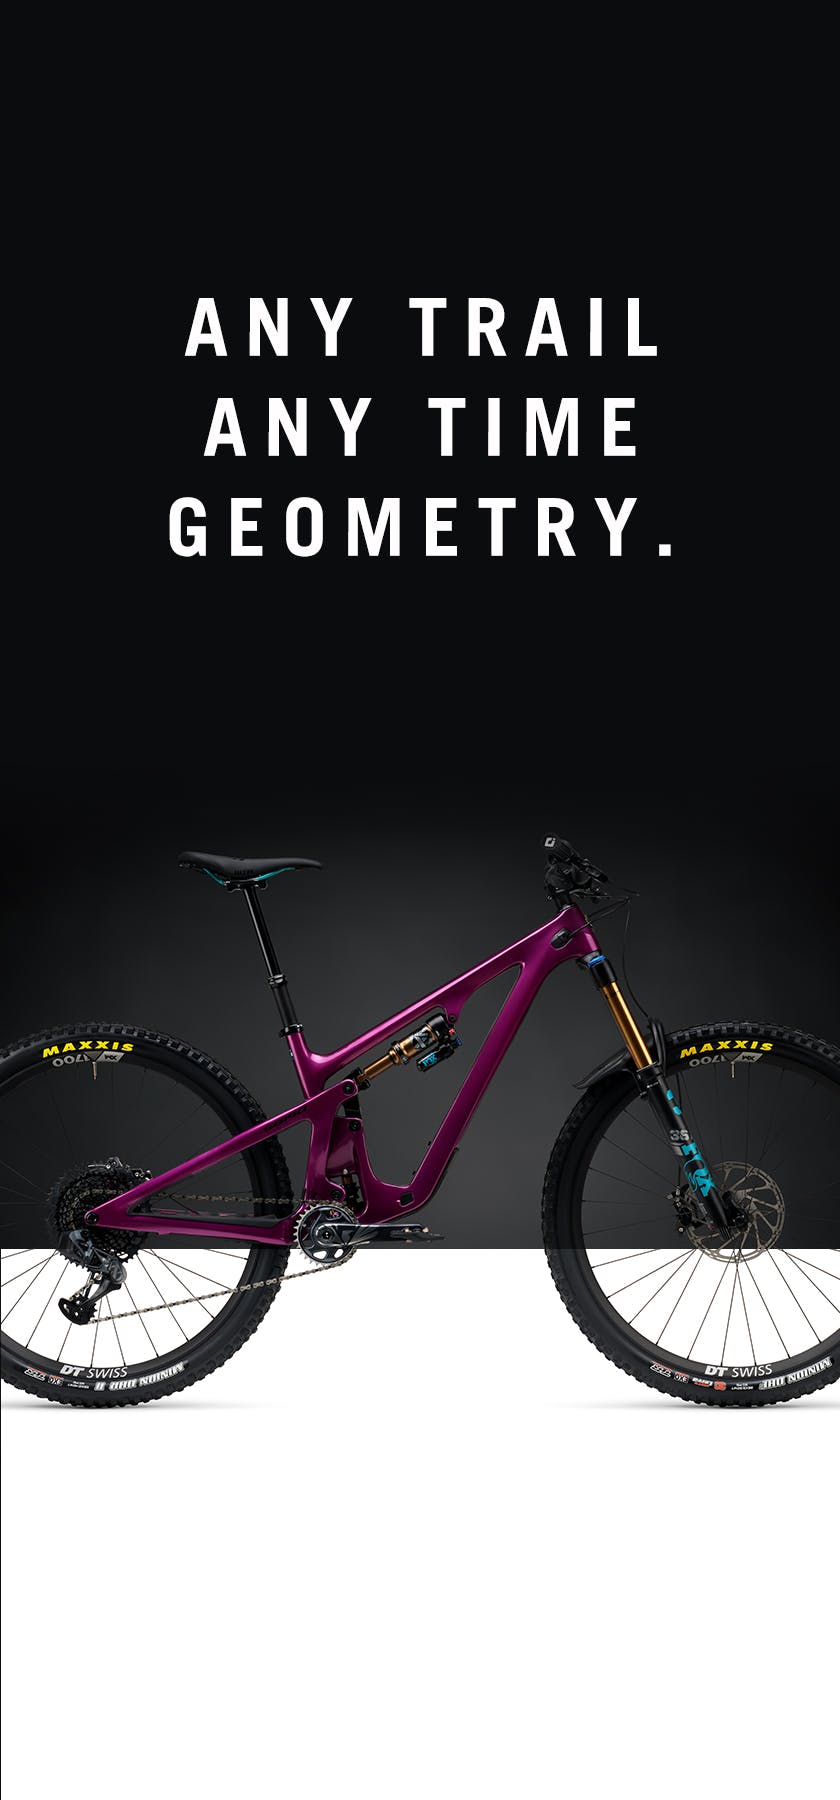 SB140 - Any Trail Any Time Geometry